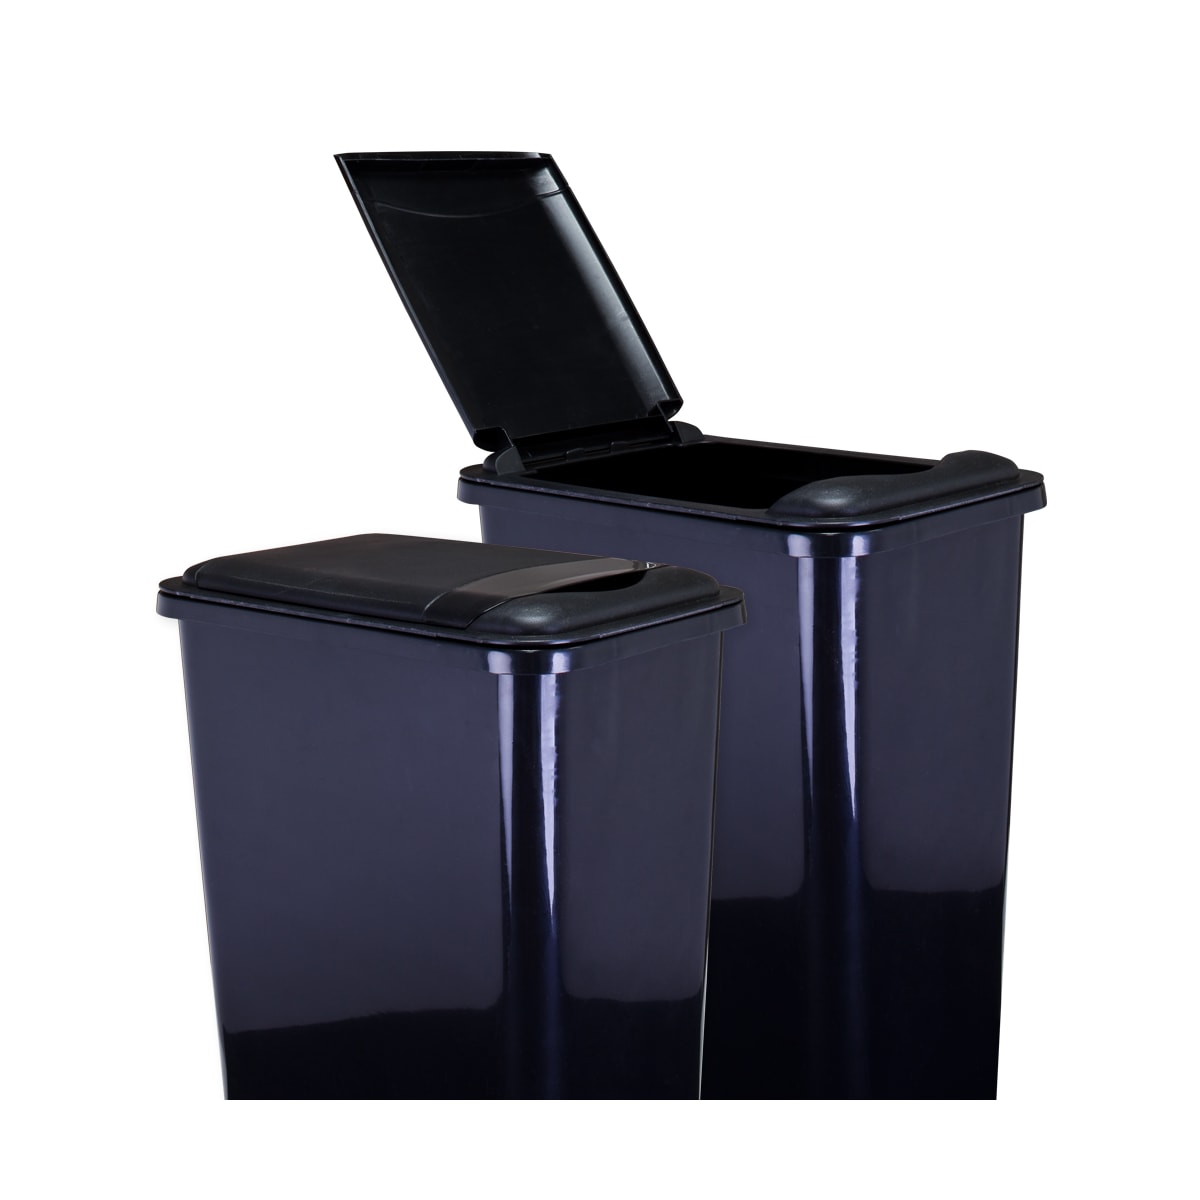 Lid for 35-Quart Plastic Waste Container, Black. 9-3/8 x 14-1/2 x 1-5/8